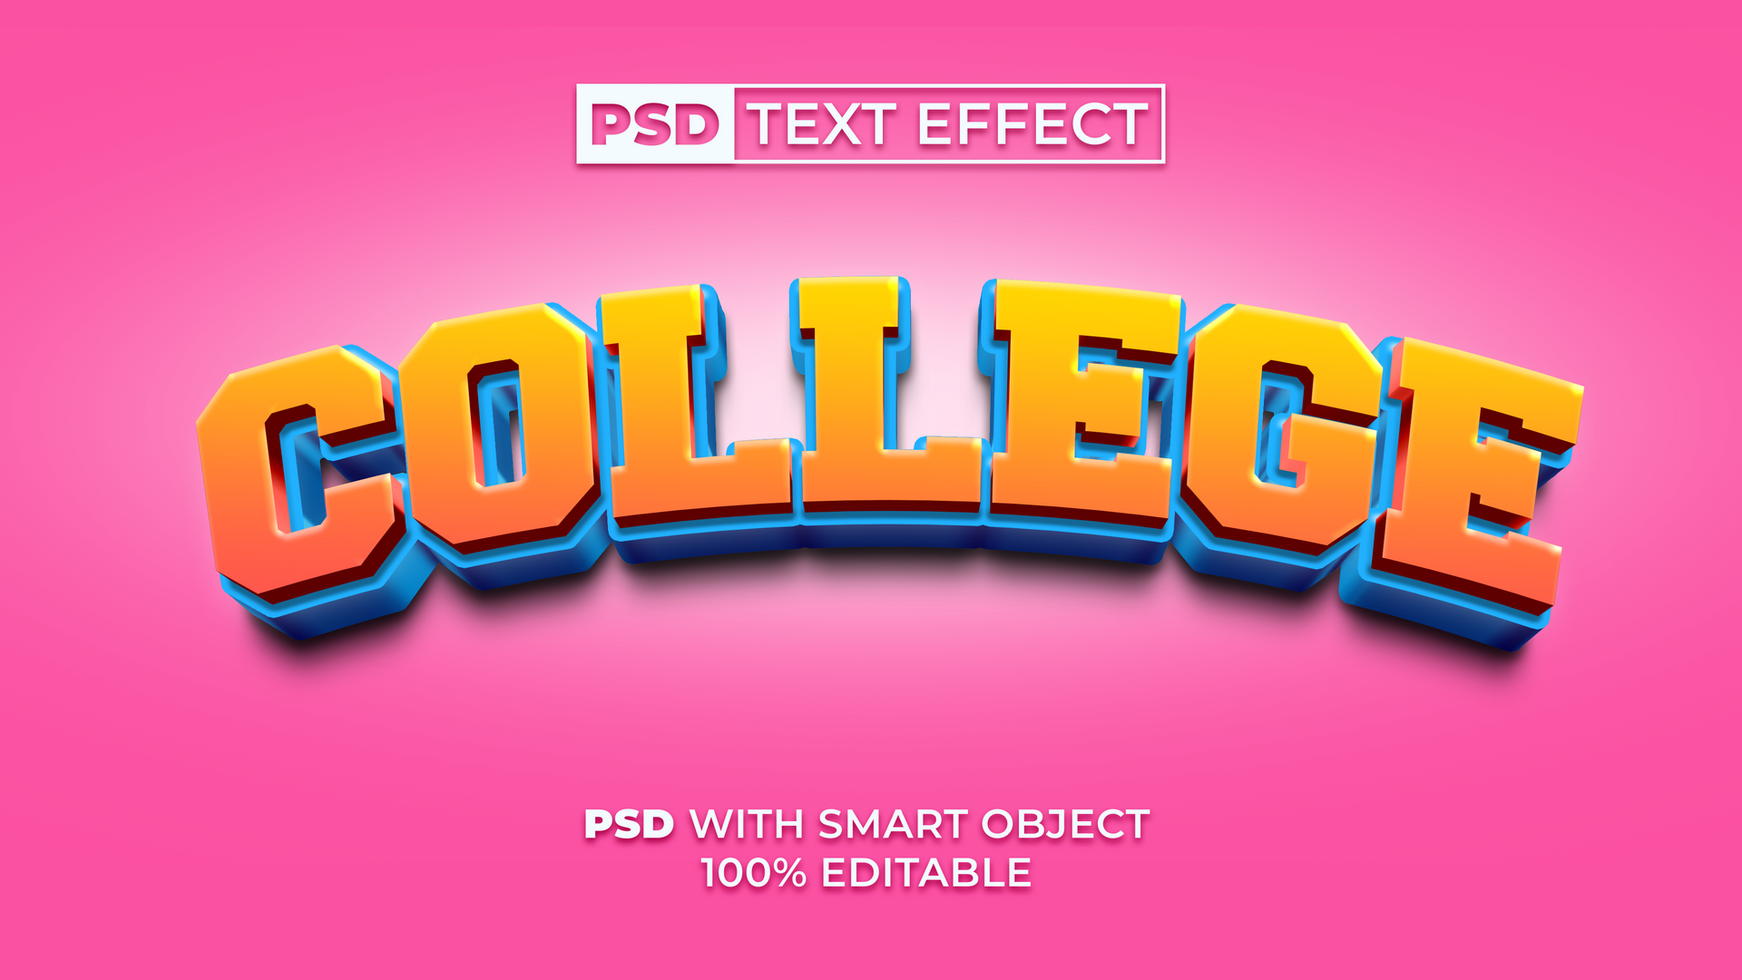 3d Universidad texto efecto estilo. editable texto efecto. psd